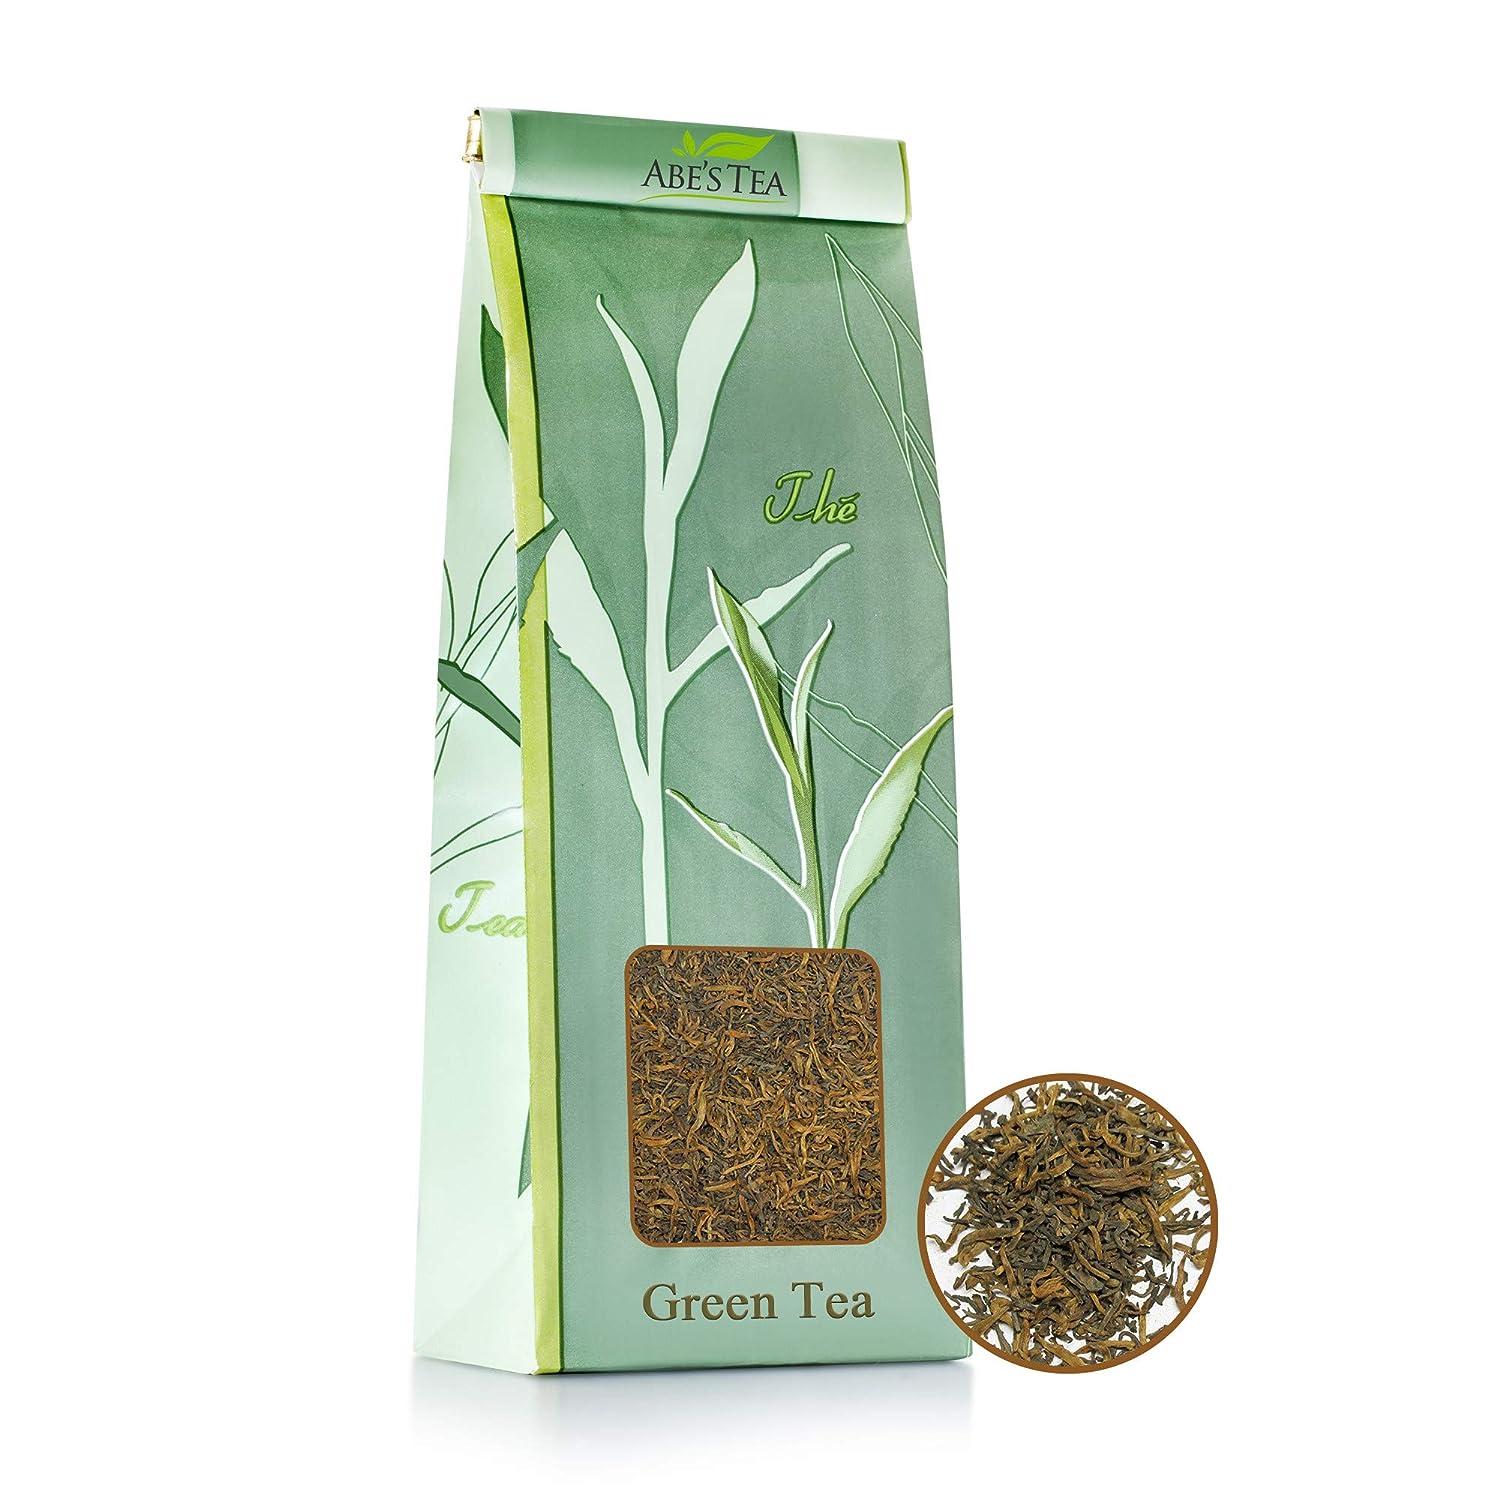 Abe's Tea |Green Tea | Premium Whole Loose Leaf Tea | Pu Erh - Year: 2004 | Flavour: Mild Hazelnut | 160g (2 X 80 Gram) | 100% Natural Leaves from China